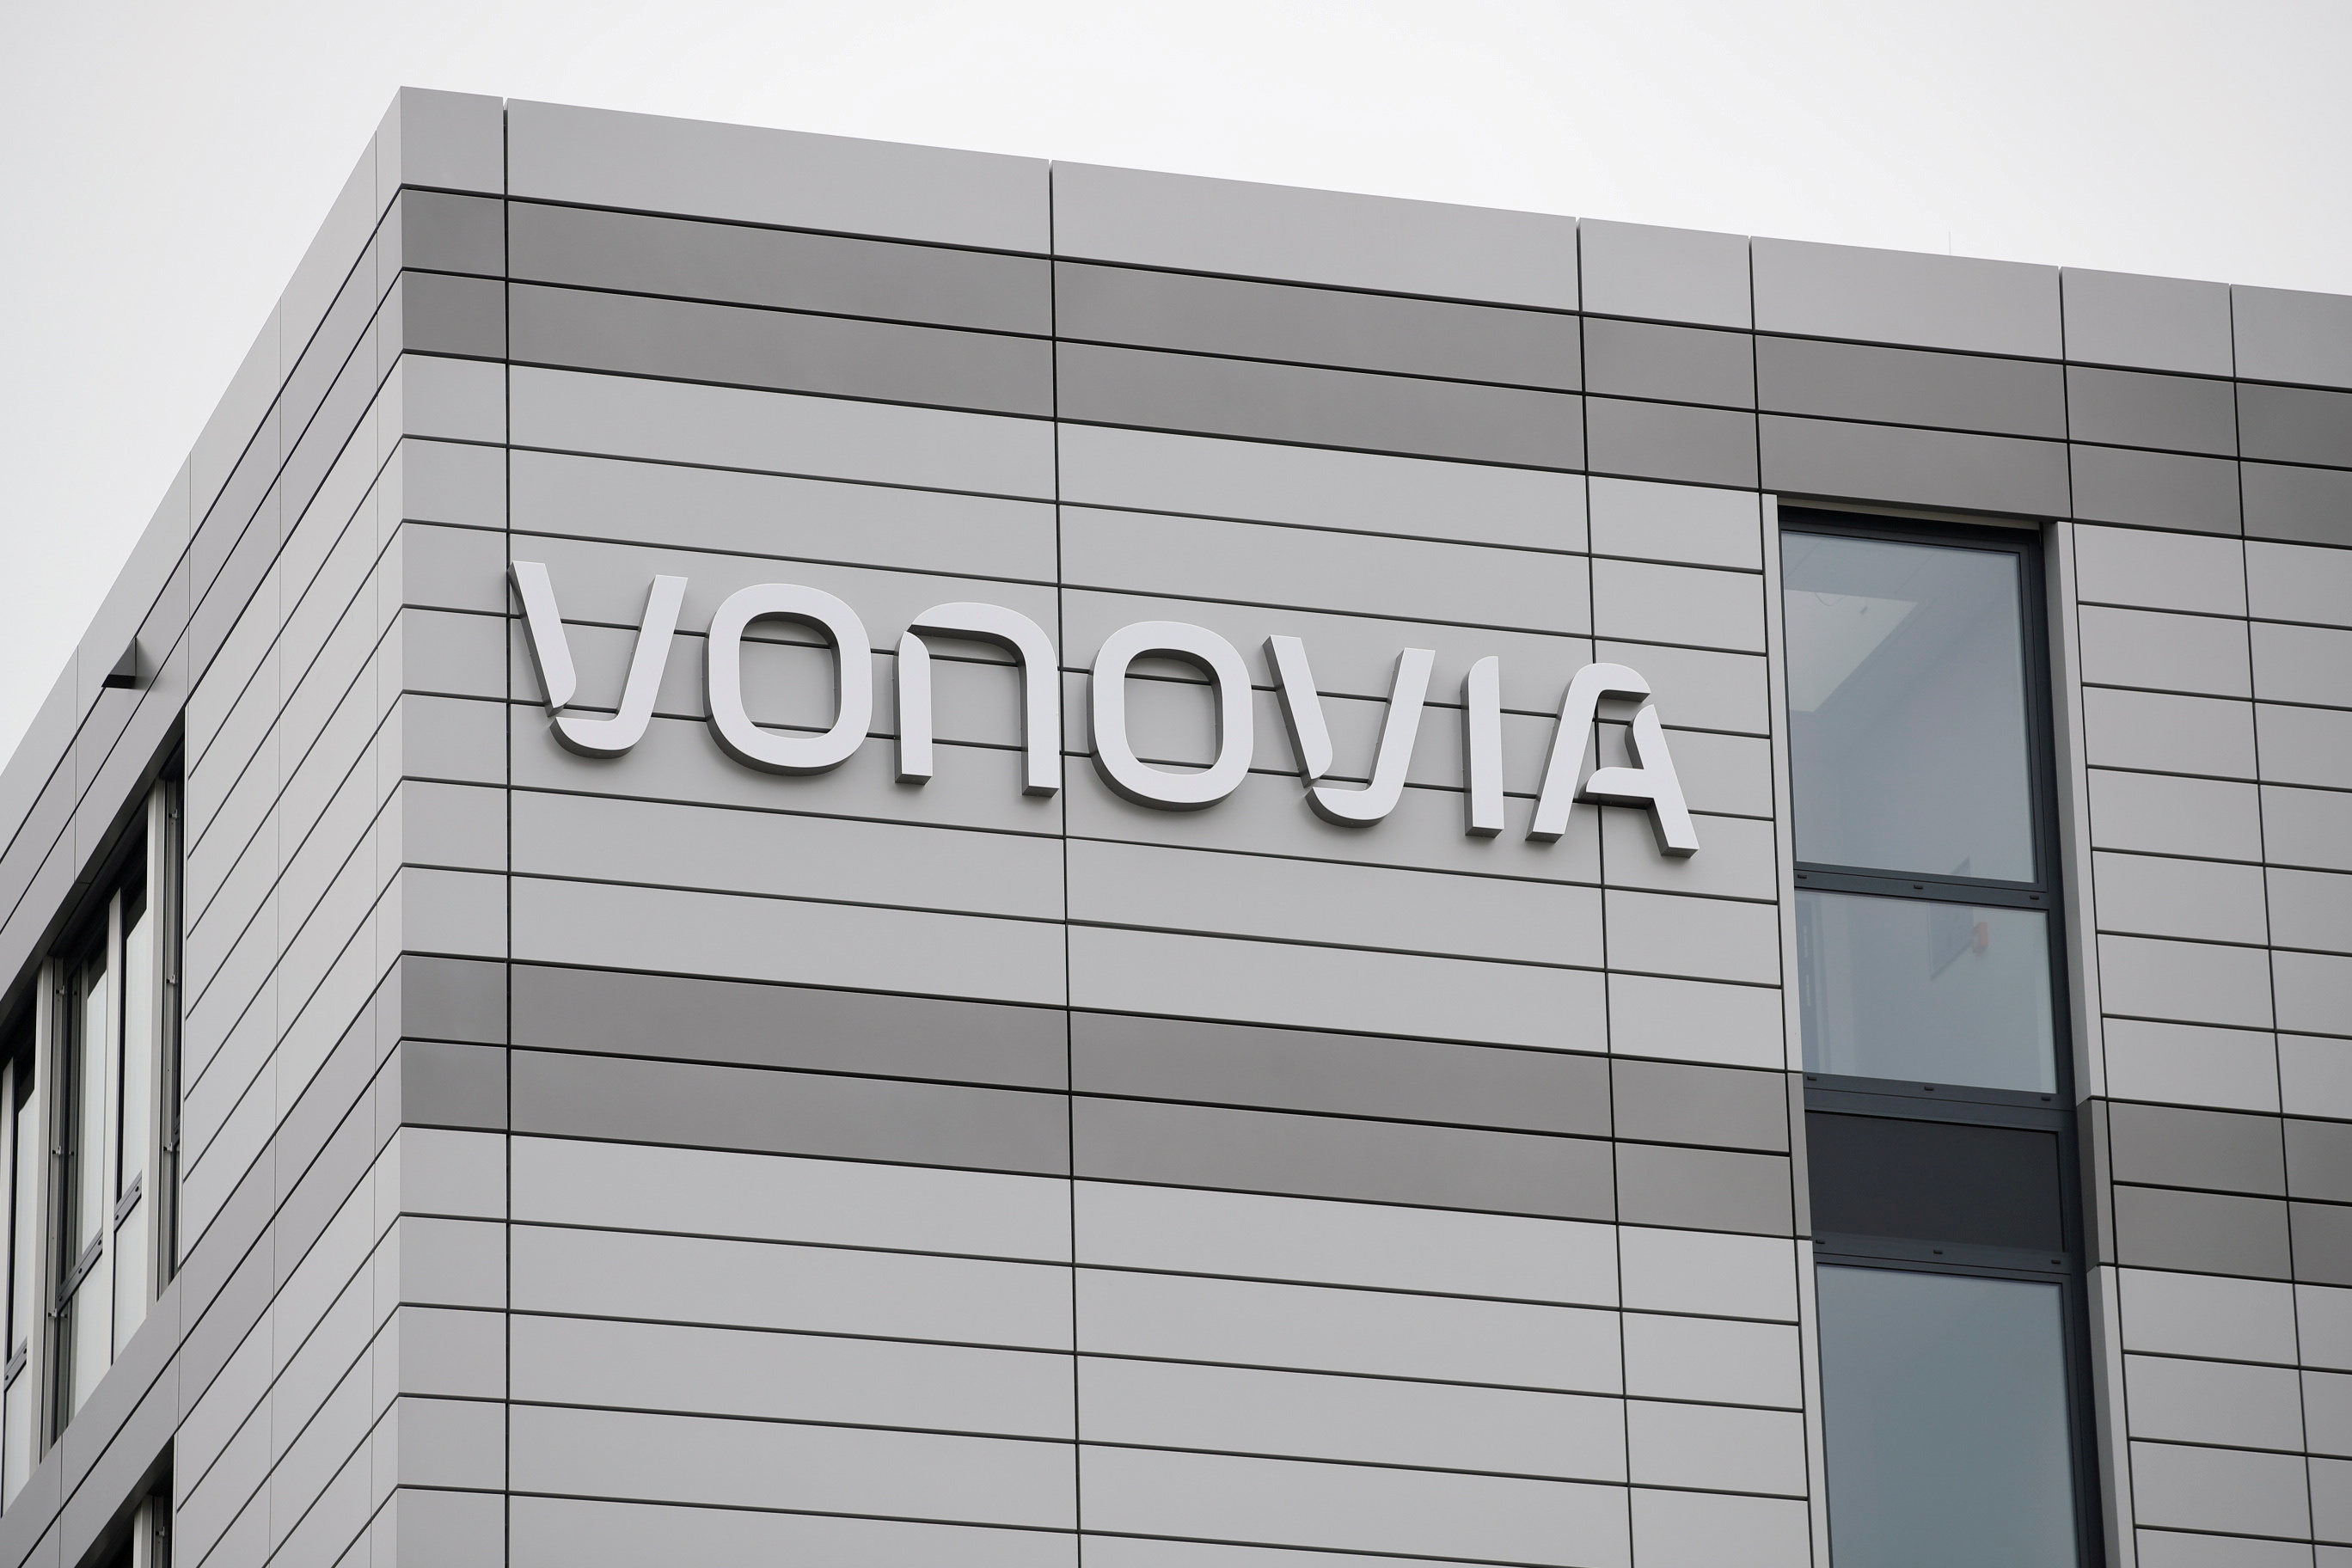 New Vonovia headquarters in Bochum